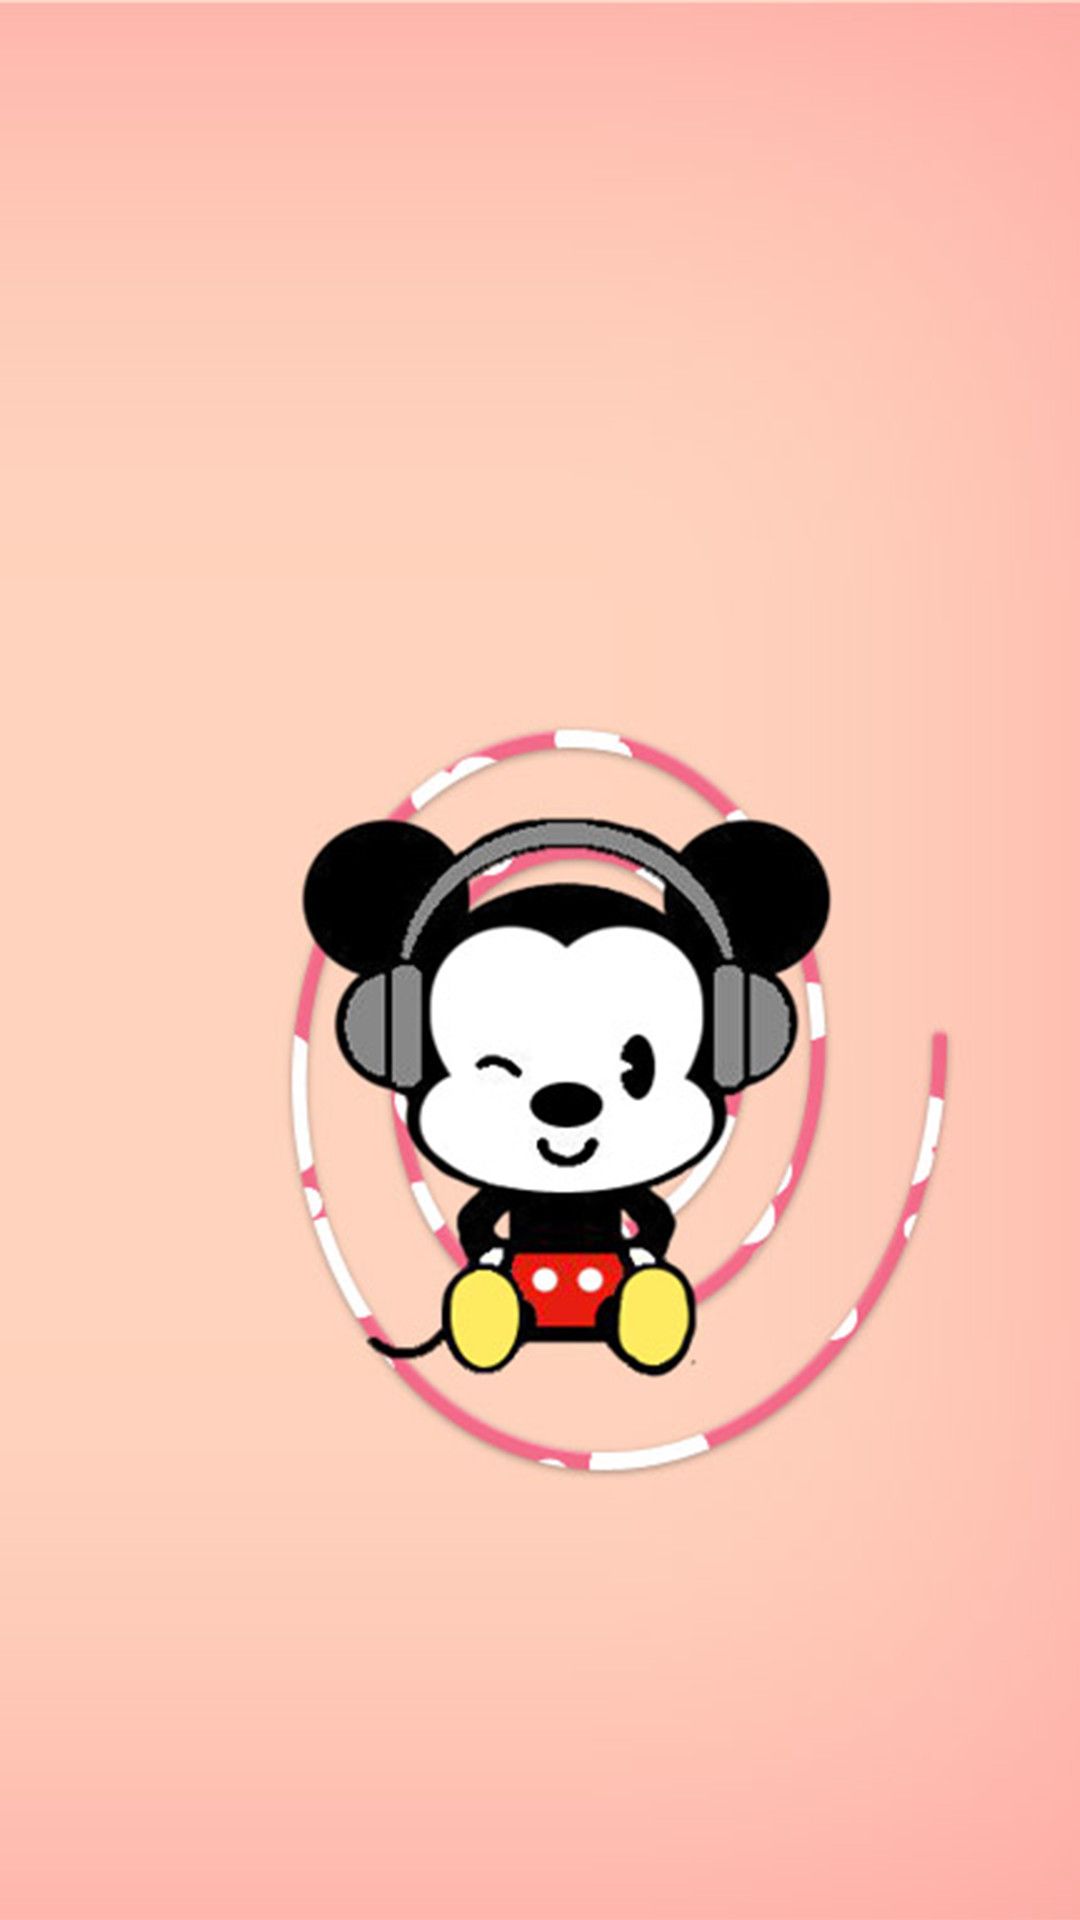 Descargar Cute Mickey Mouse Wallpaper Hd. Cute Mickey Mouse